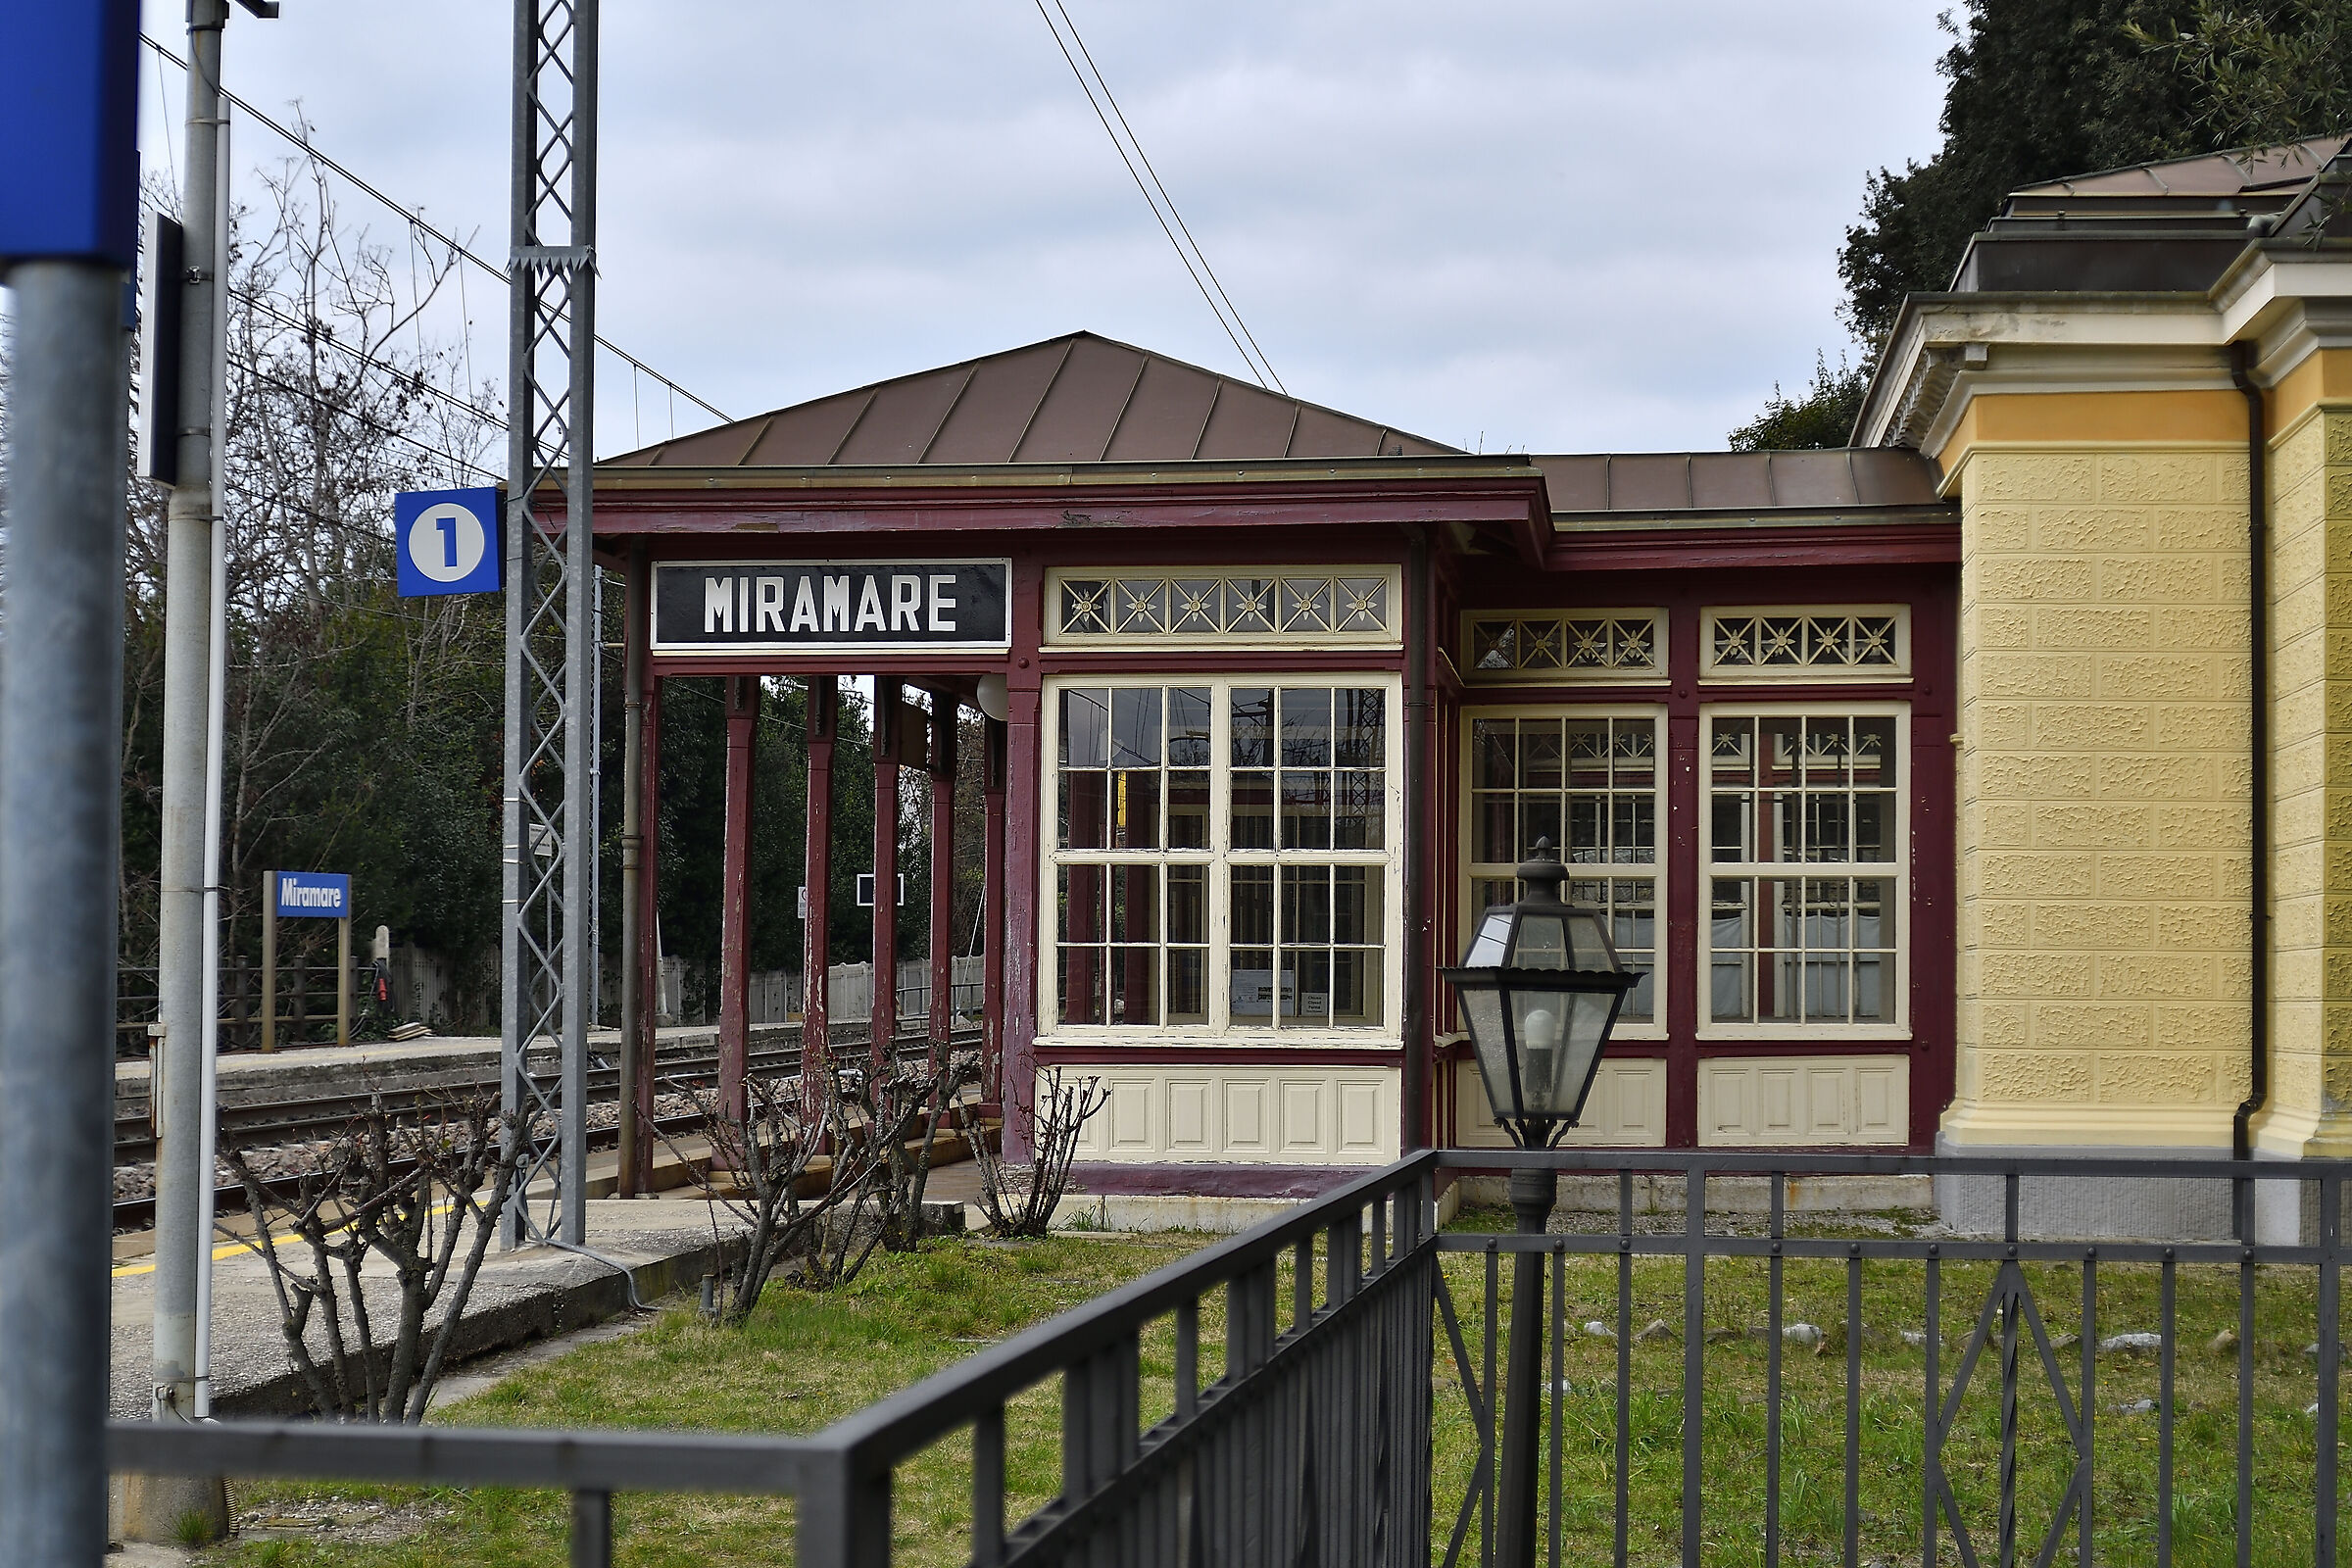 Miramare railway station...